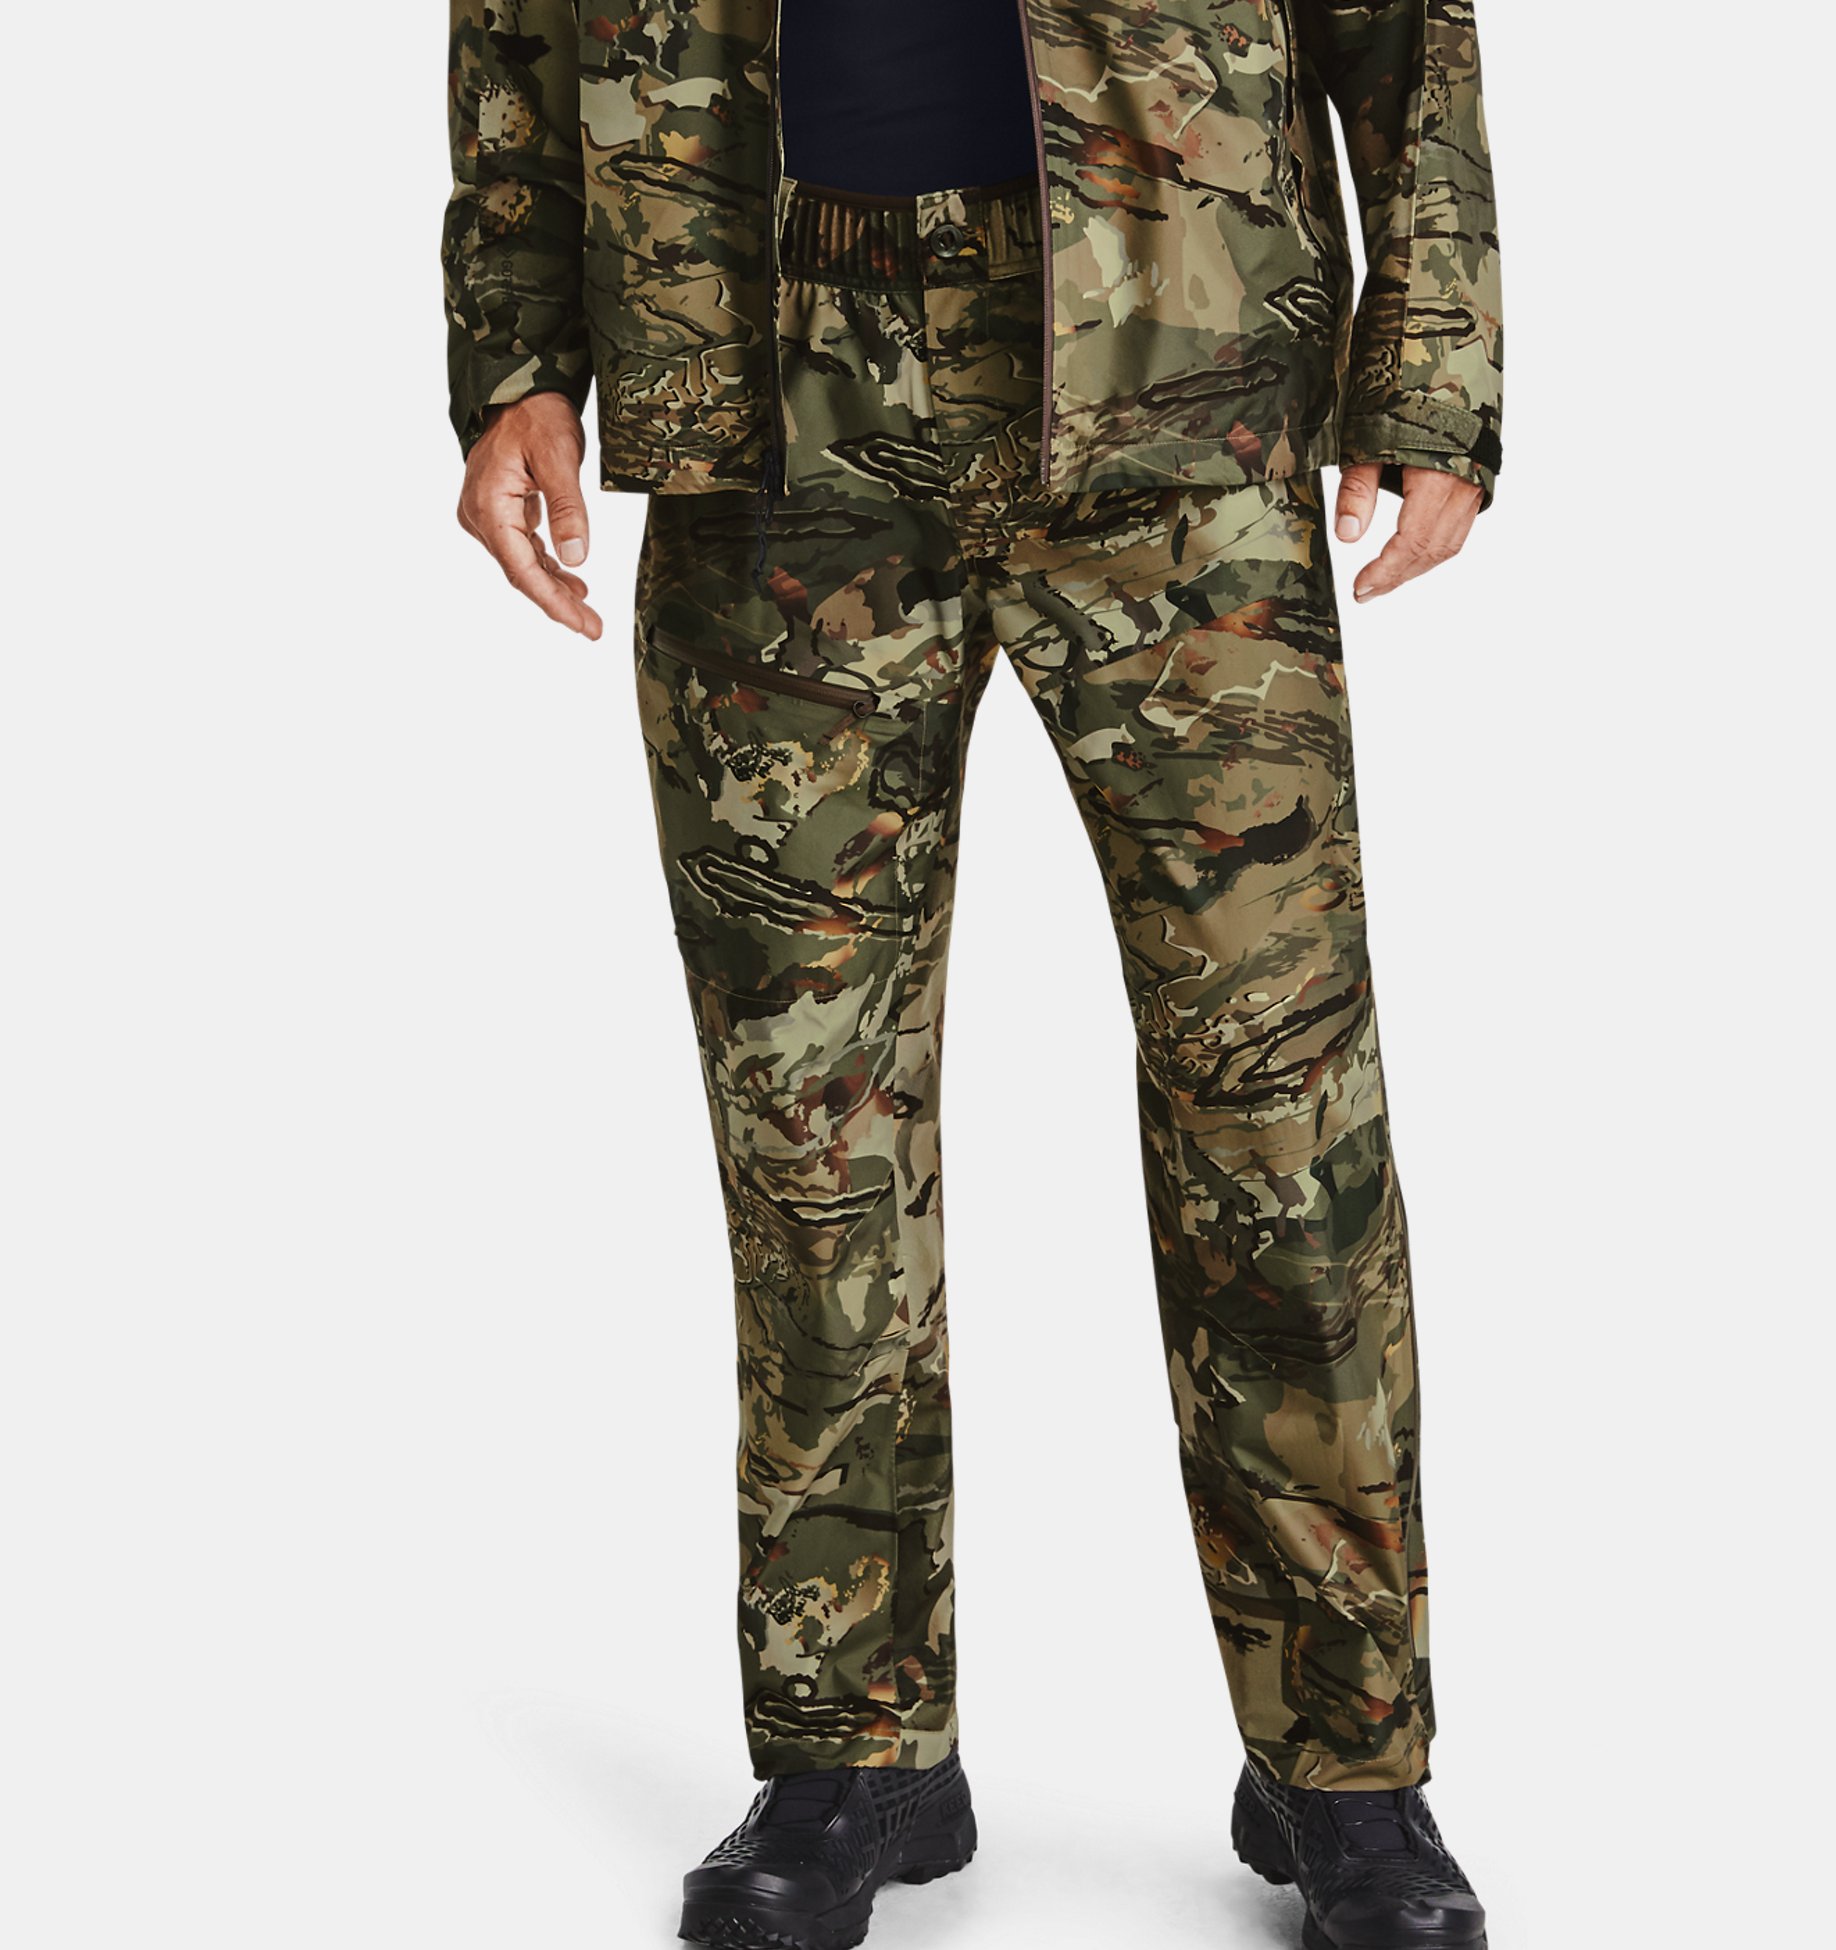 Underarmour Mens GORE-TEX Essential Hybrid Pants